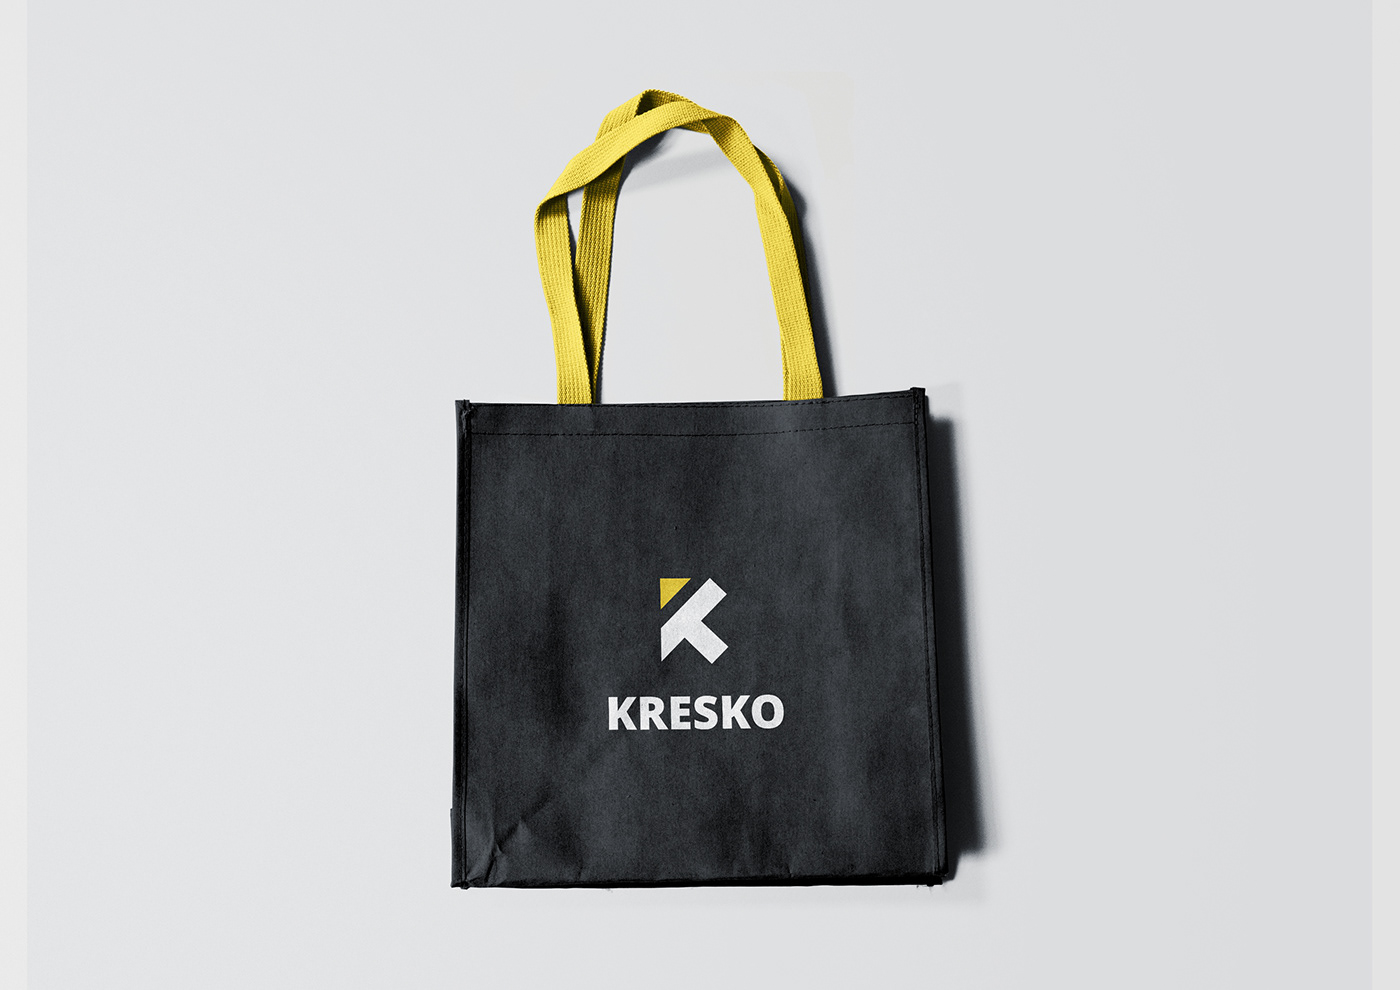 construction design Kresko logo paraguay